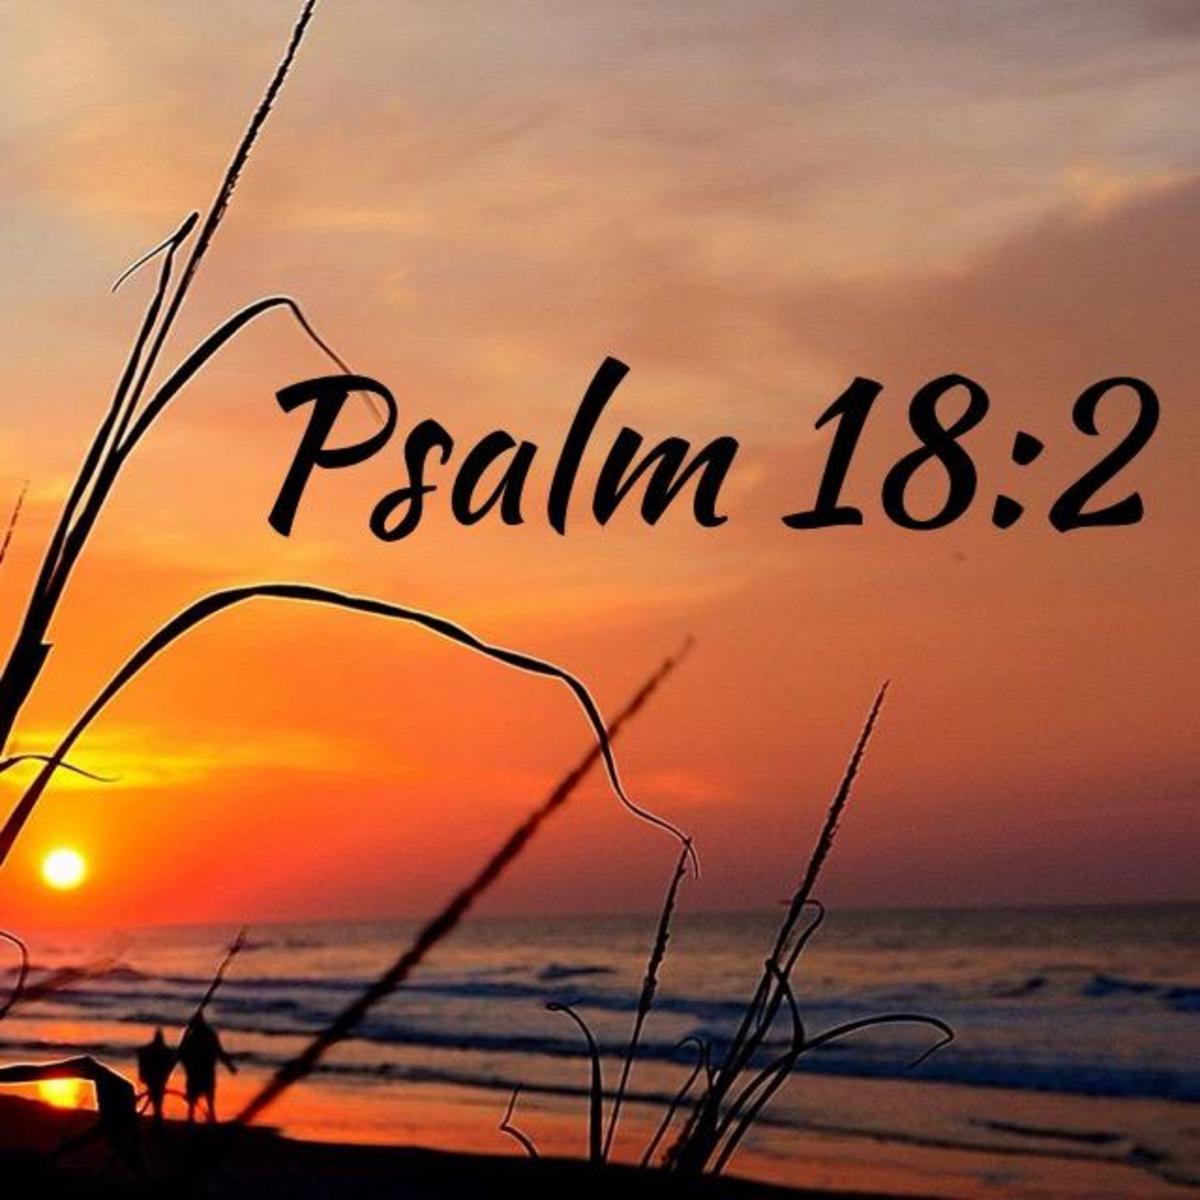 psalm-182-lists-8-metaphors-for-god